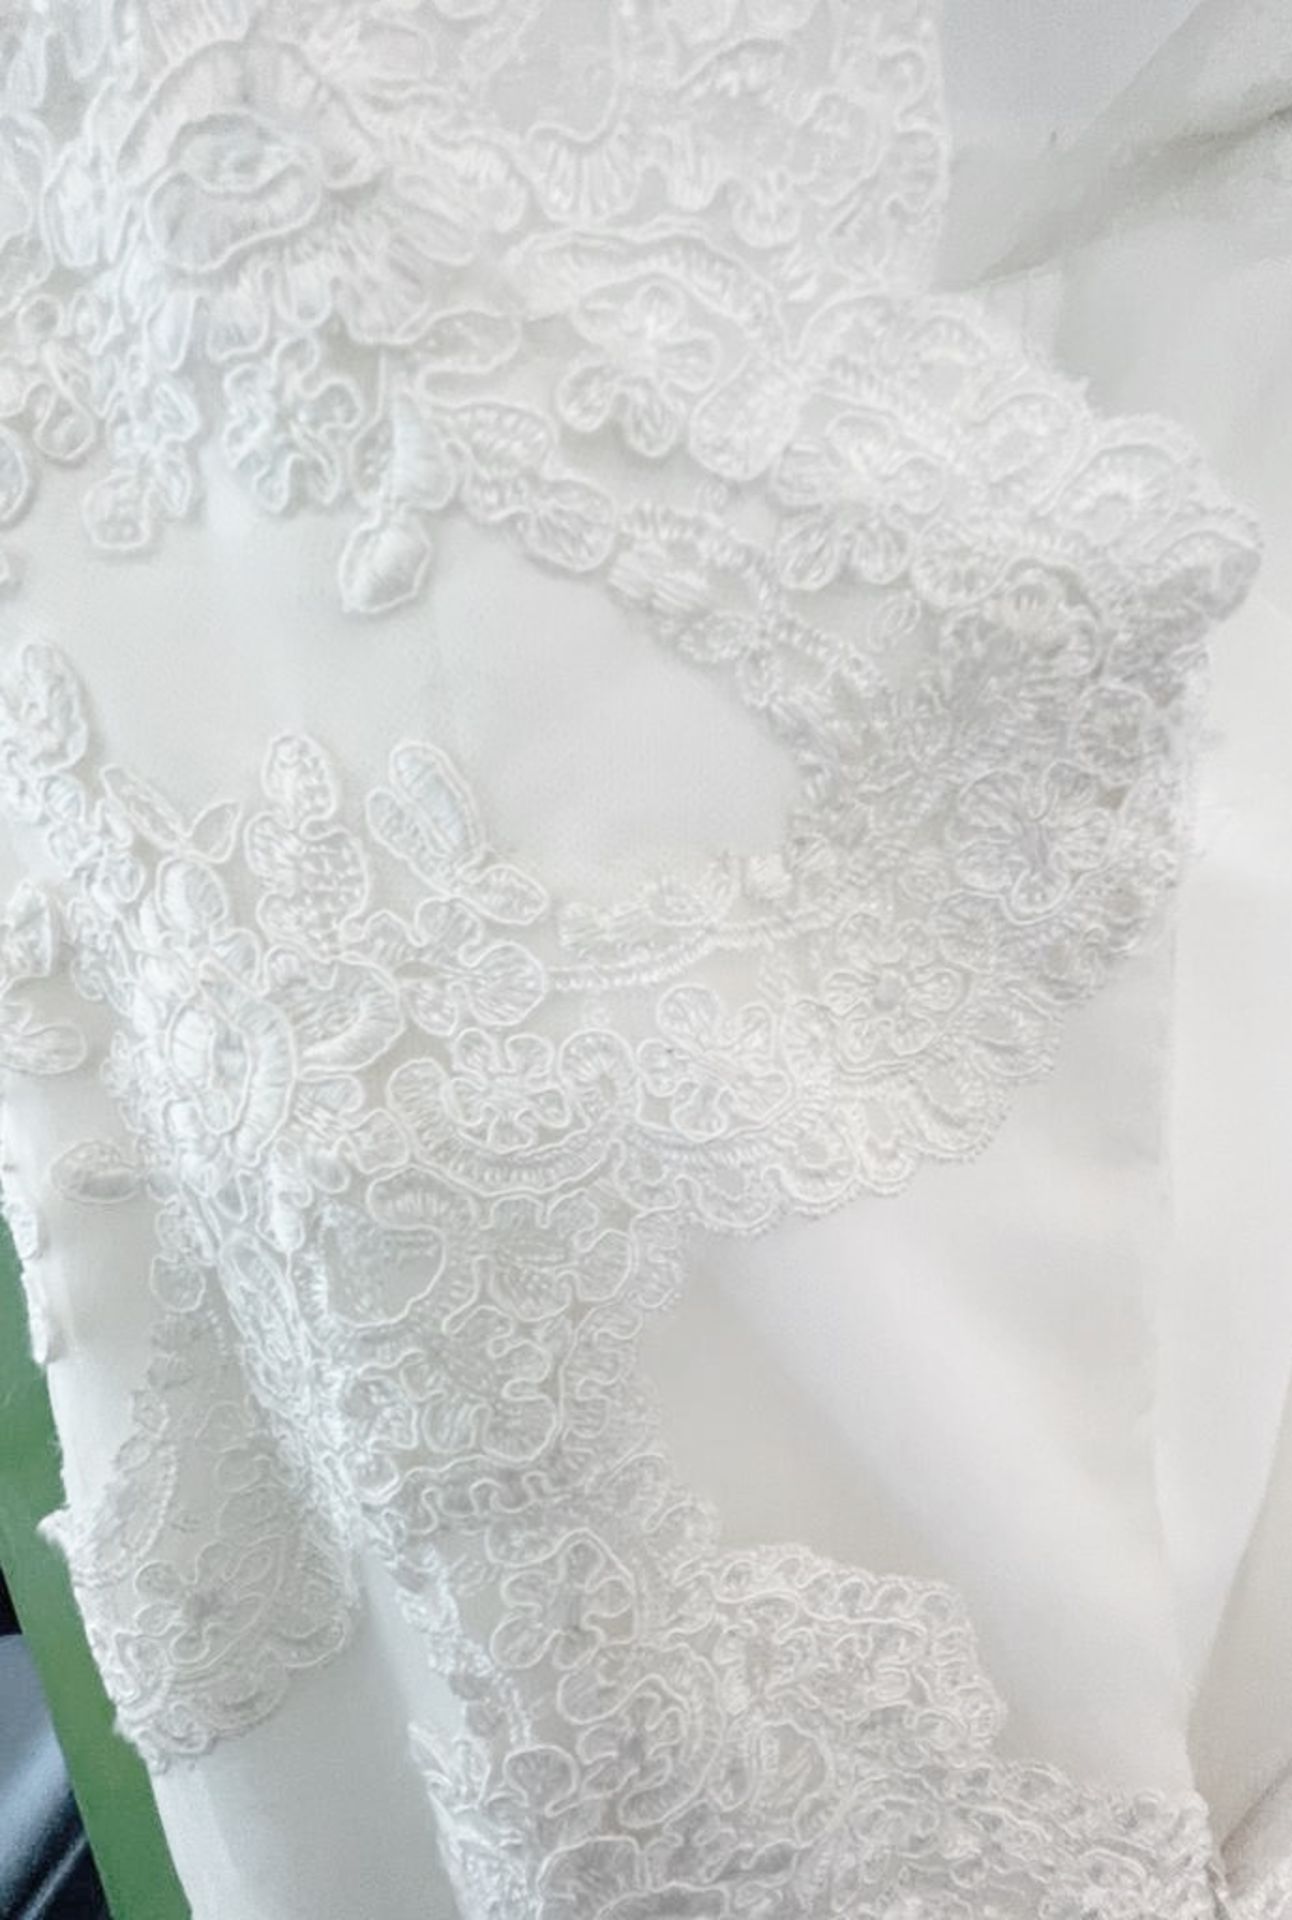 1 x LUSAN MANDONGUS 'Zayna' Designer Wedding Dress Bridal Gown - Size: UK 10 - Original RRP £1,550 - - Image 4 of 13